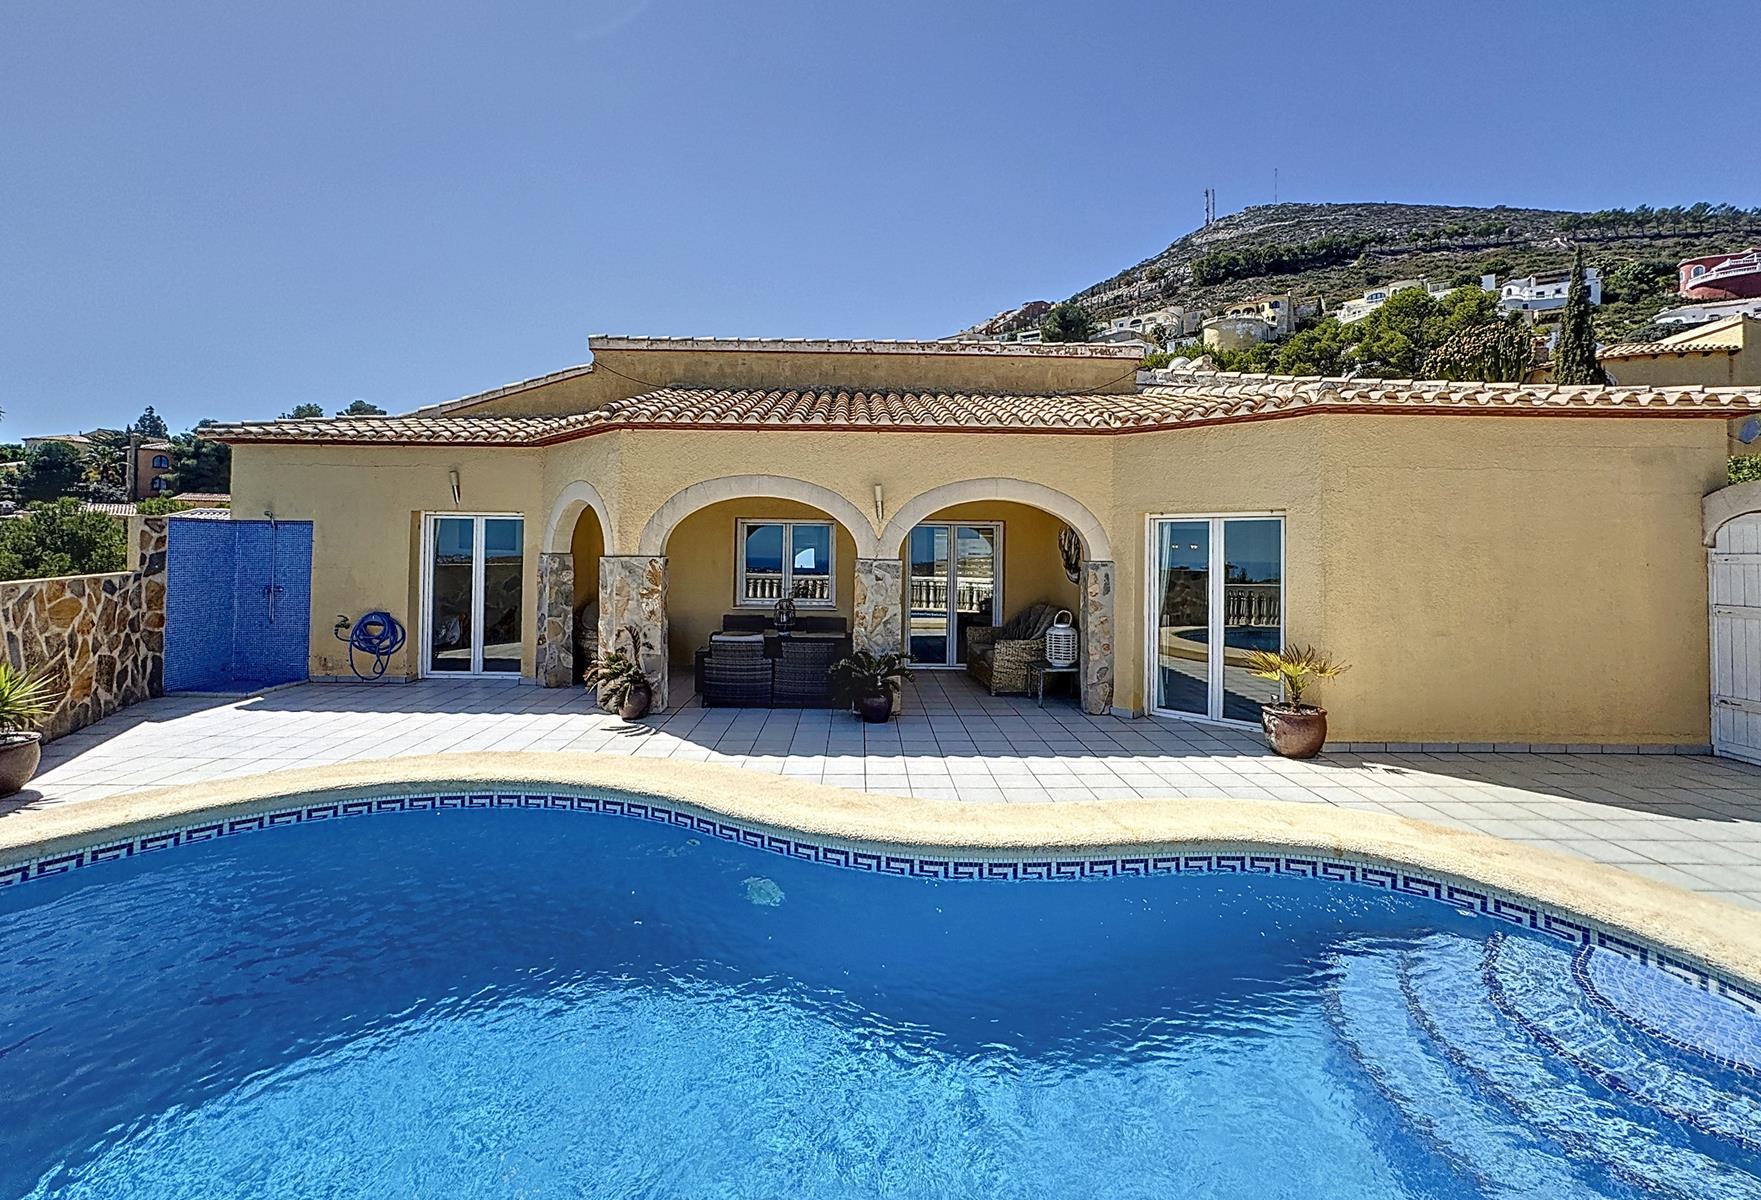 Villa Cumbre del Sol avec vue sur la mer et piscine privée